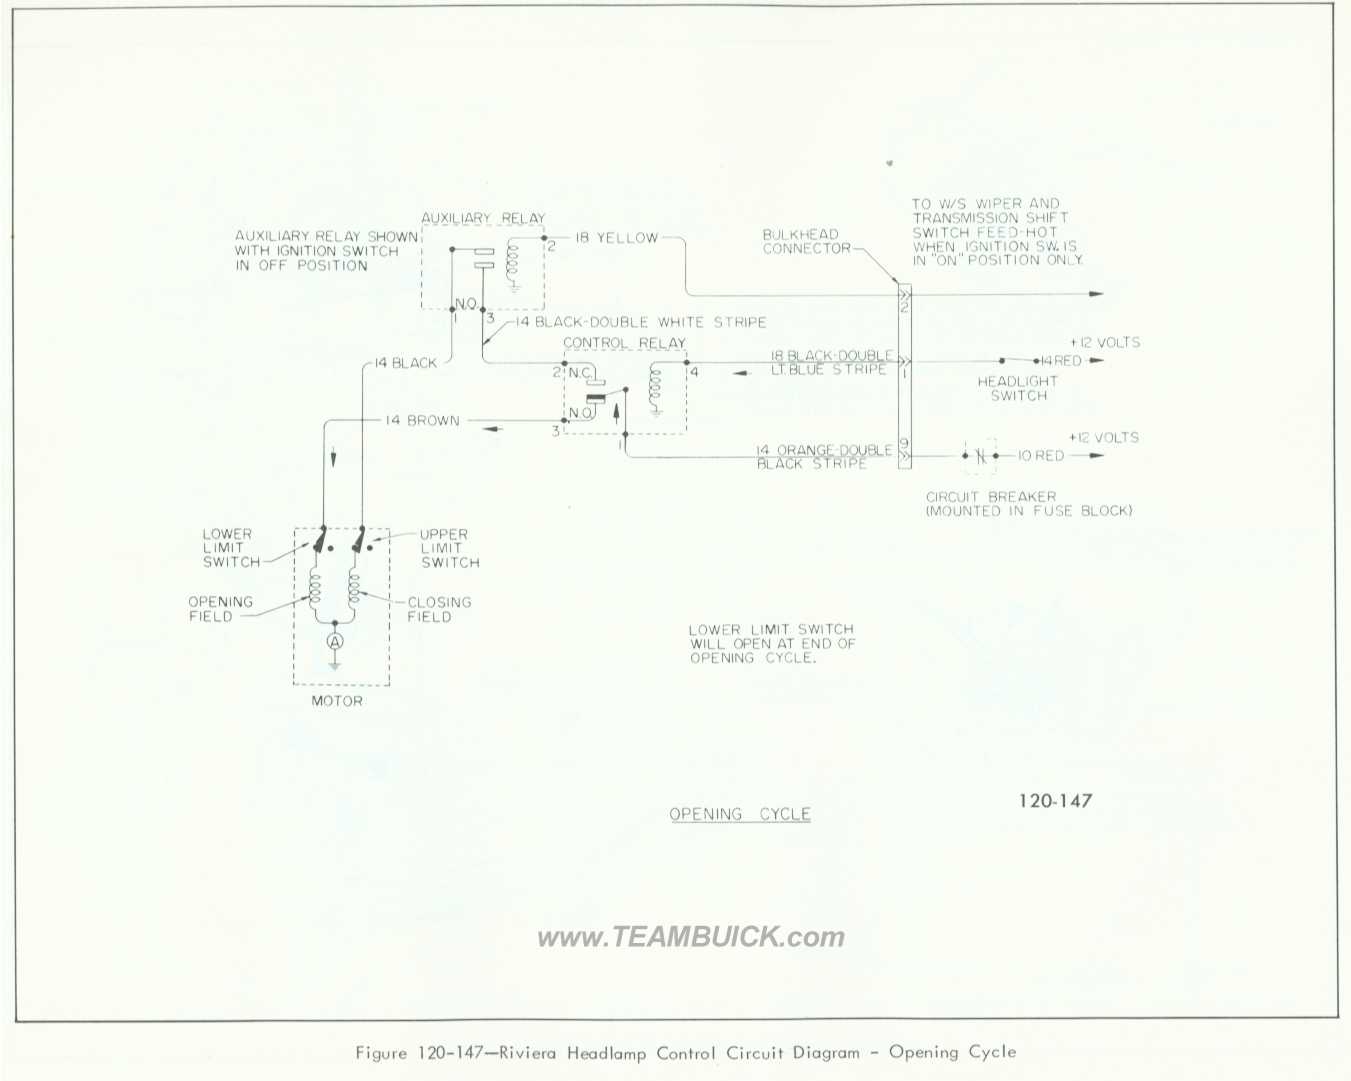 1966 Buick Riviera, Headlamp Control Circuit Diagram - Opening Cycle